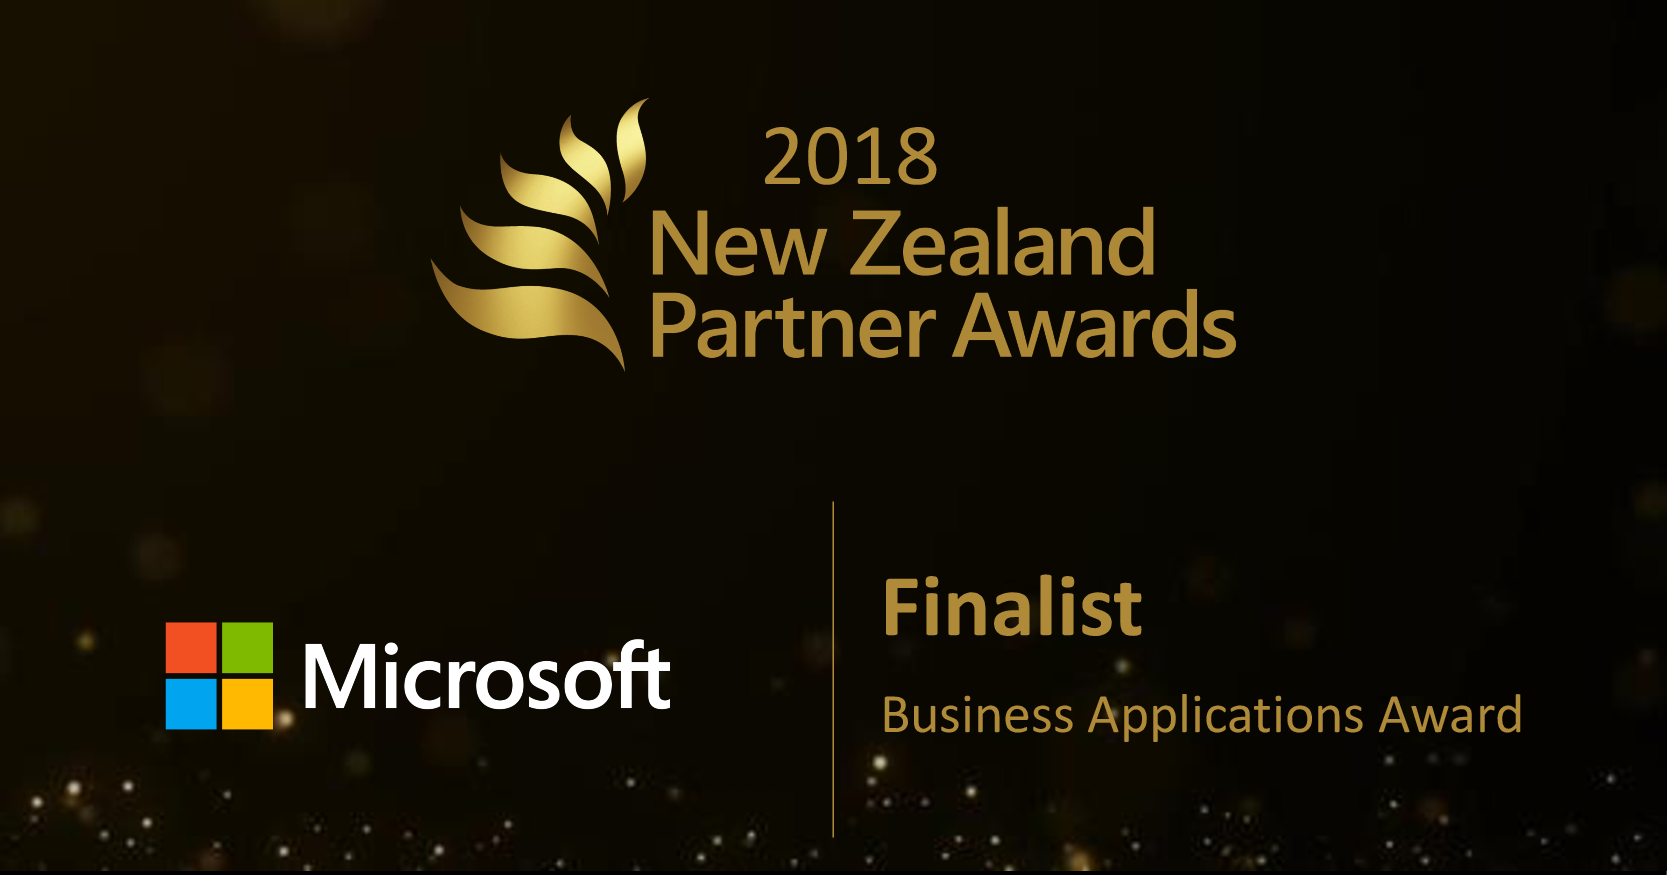 Microsoft 2018 New Zealand Partner Awards Finalist, Business Applications Award.